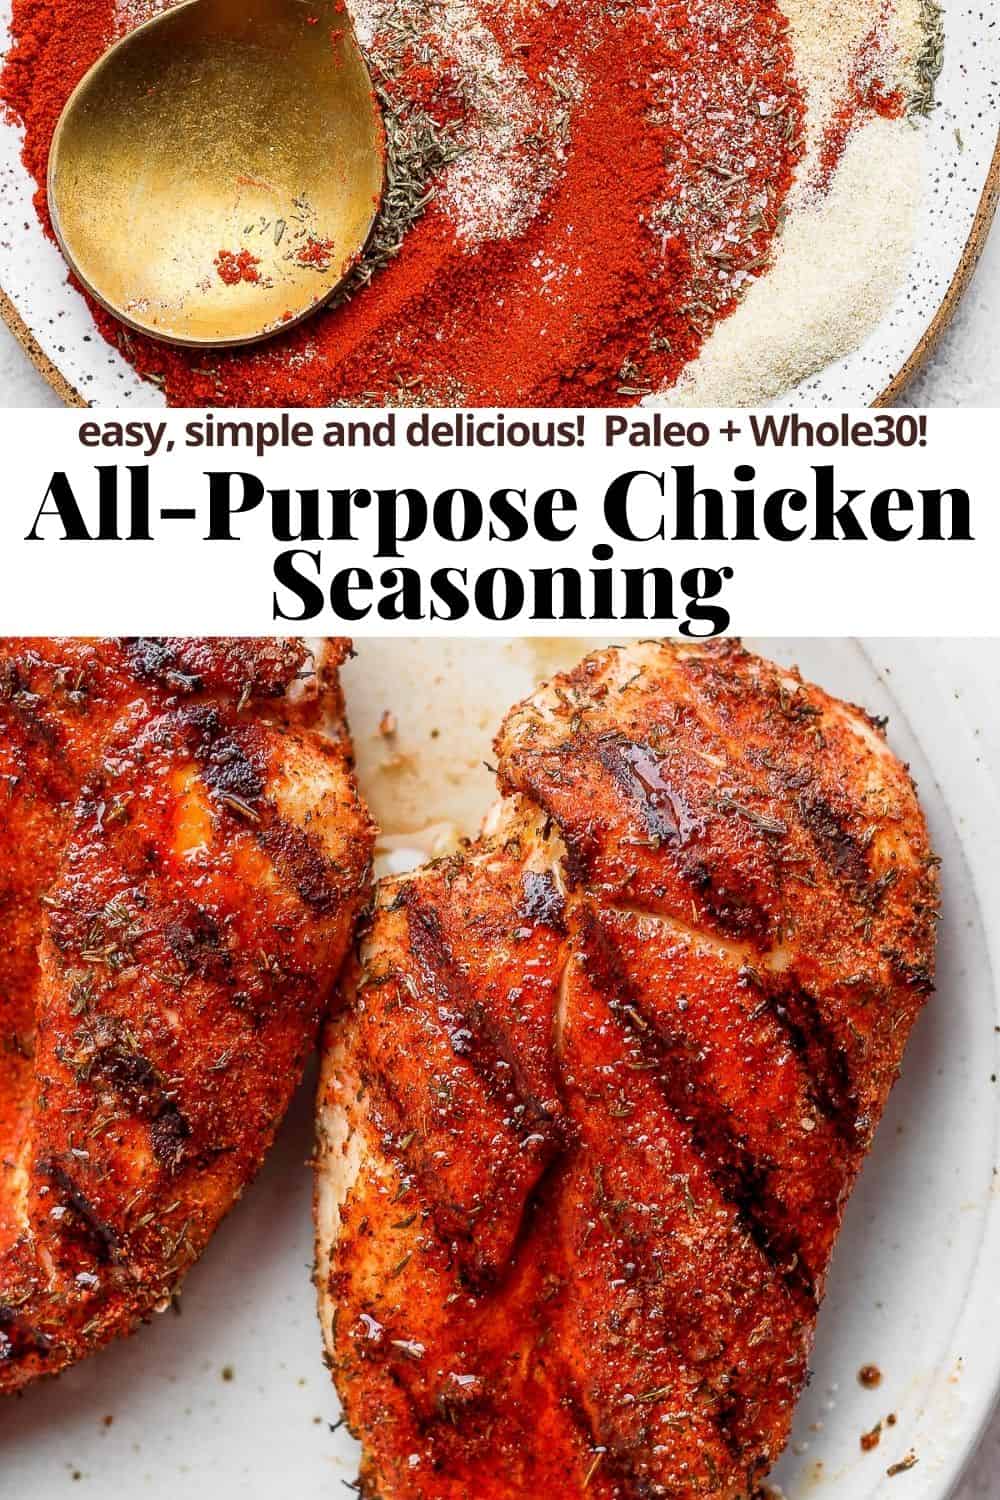 https://thewoodenskillet.com/wp-content/uploads/2021/07/chicken-seasoning-recipe.jpg